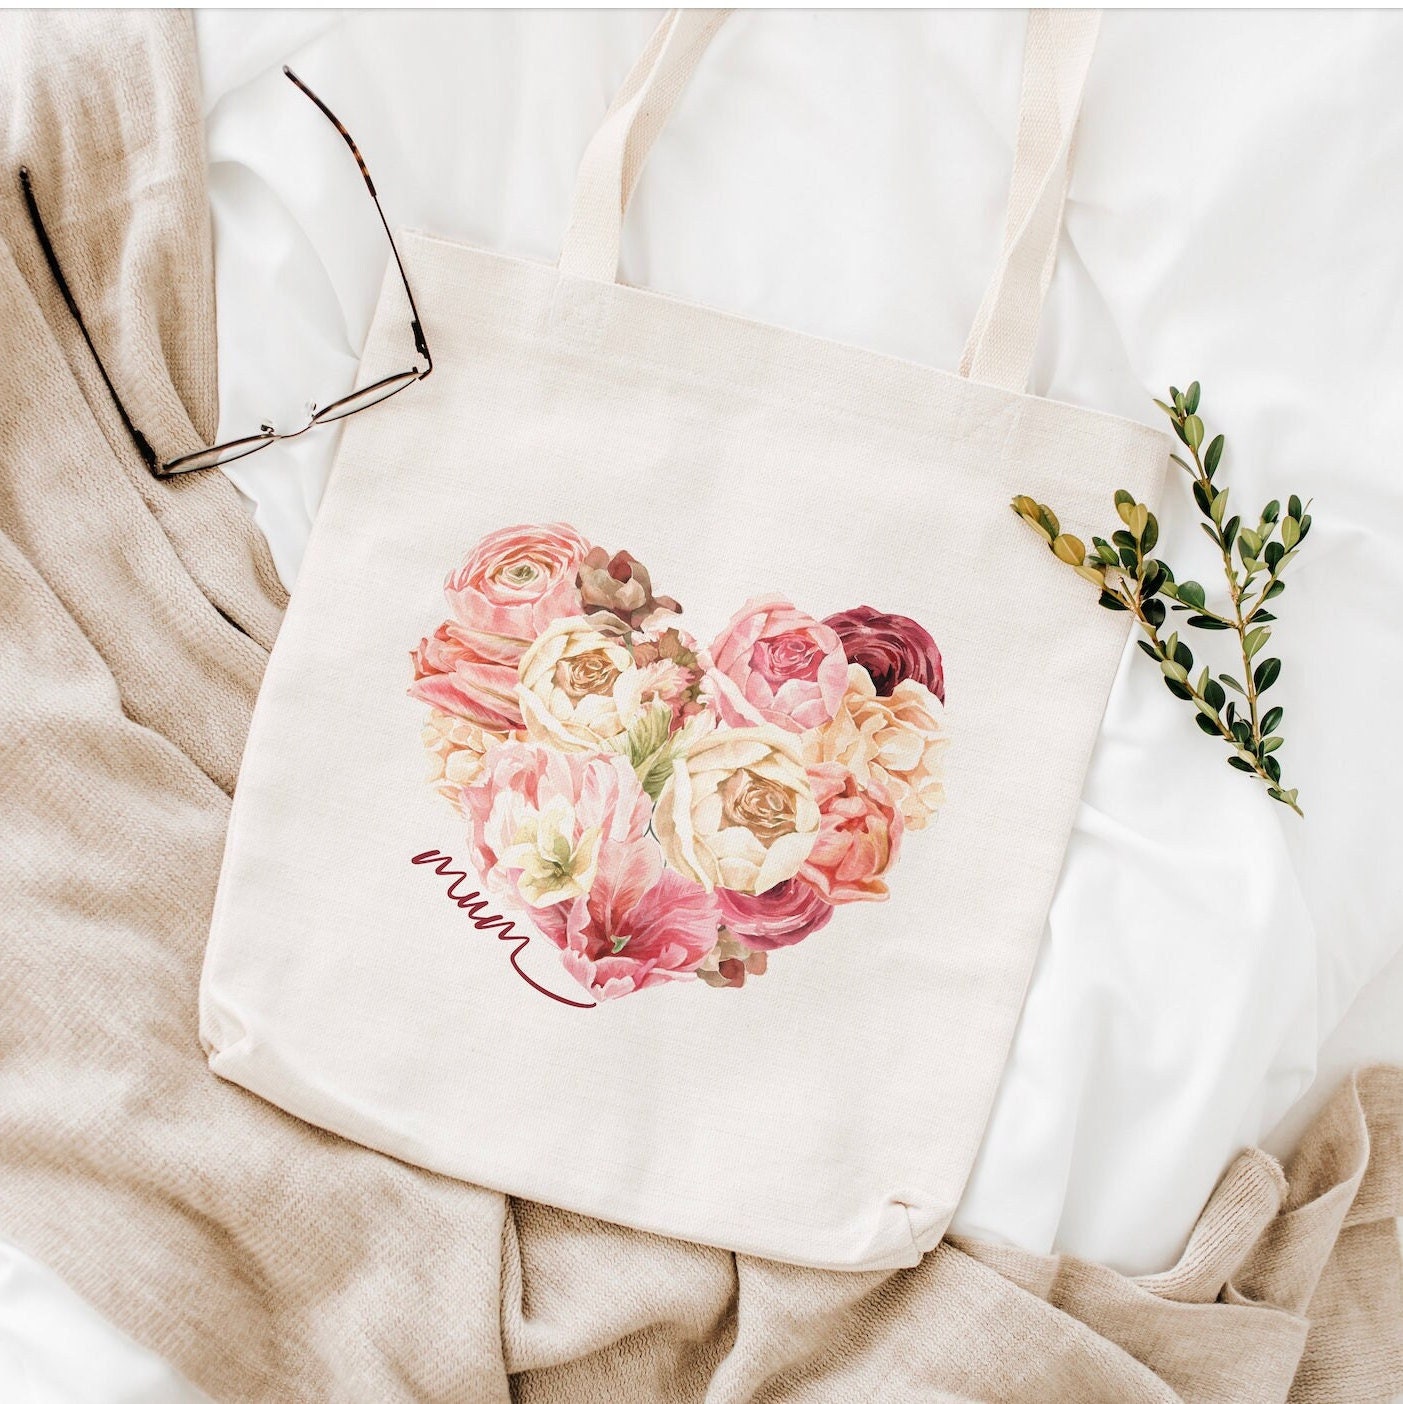 Personalised mum nanny name tote bag, Flower heart Shopping or knitting bag, Gift for her mum